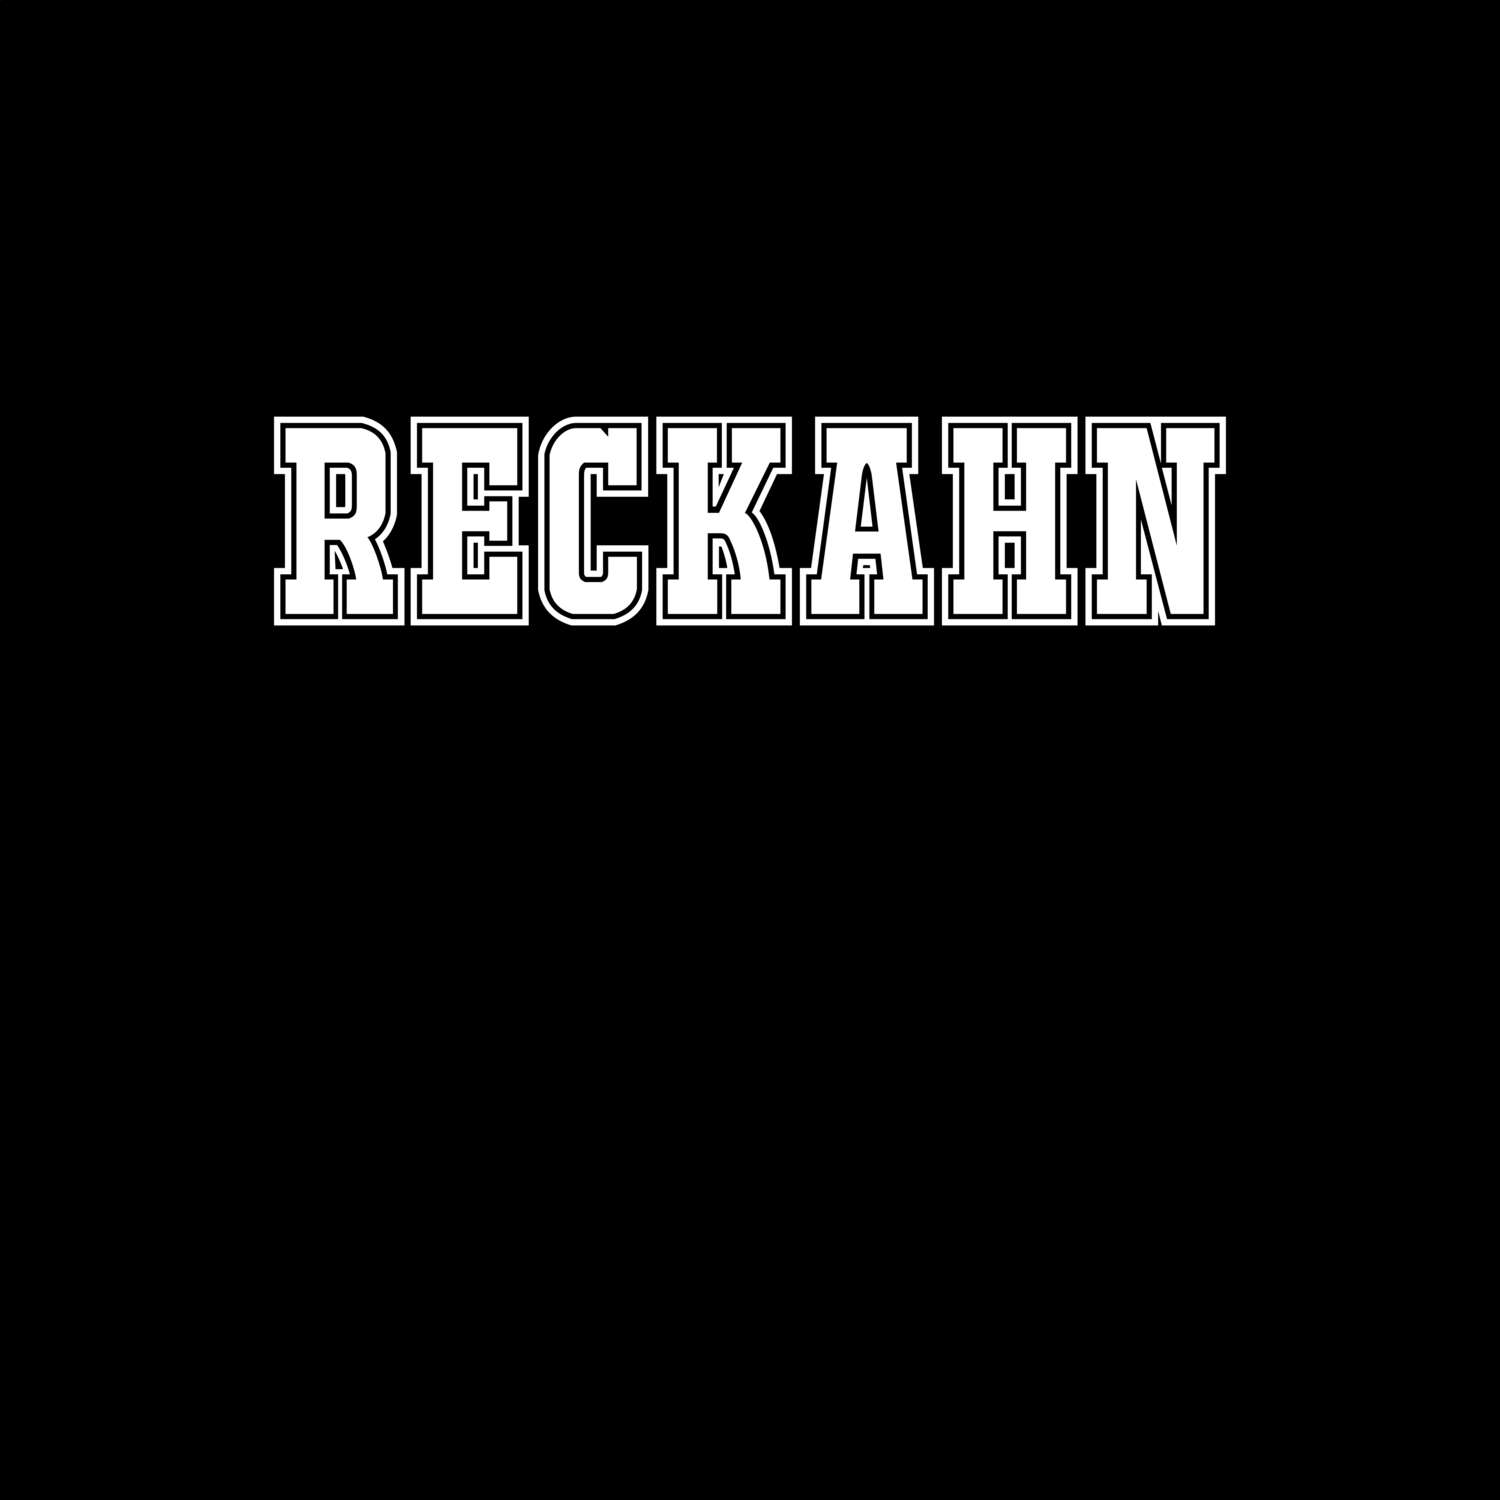 Reckahn T-Shirt »Classic«